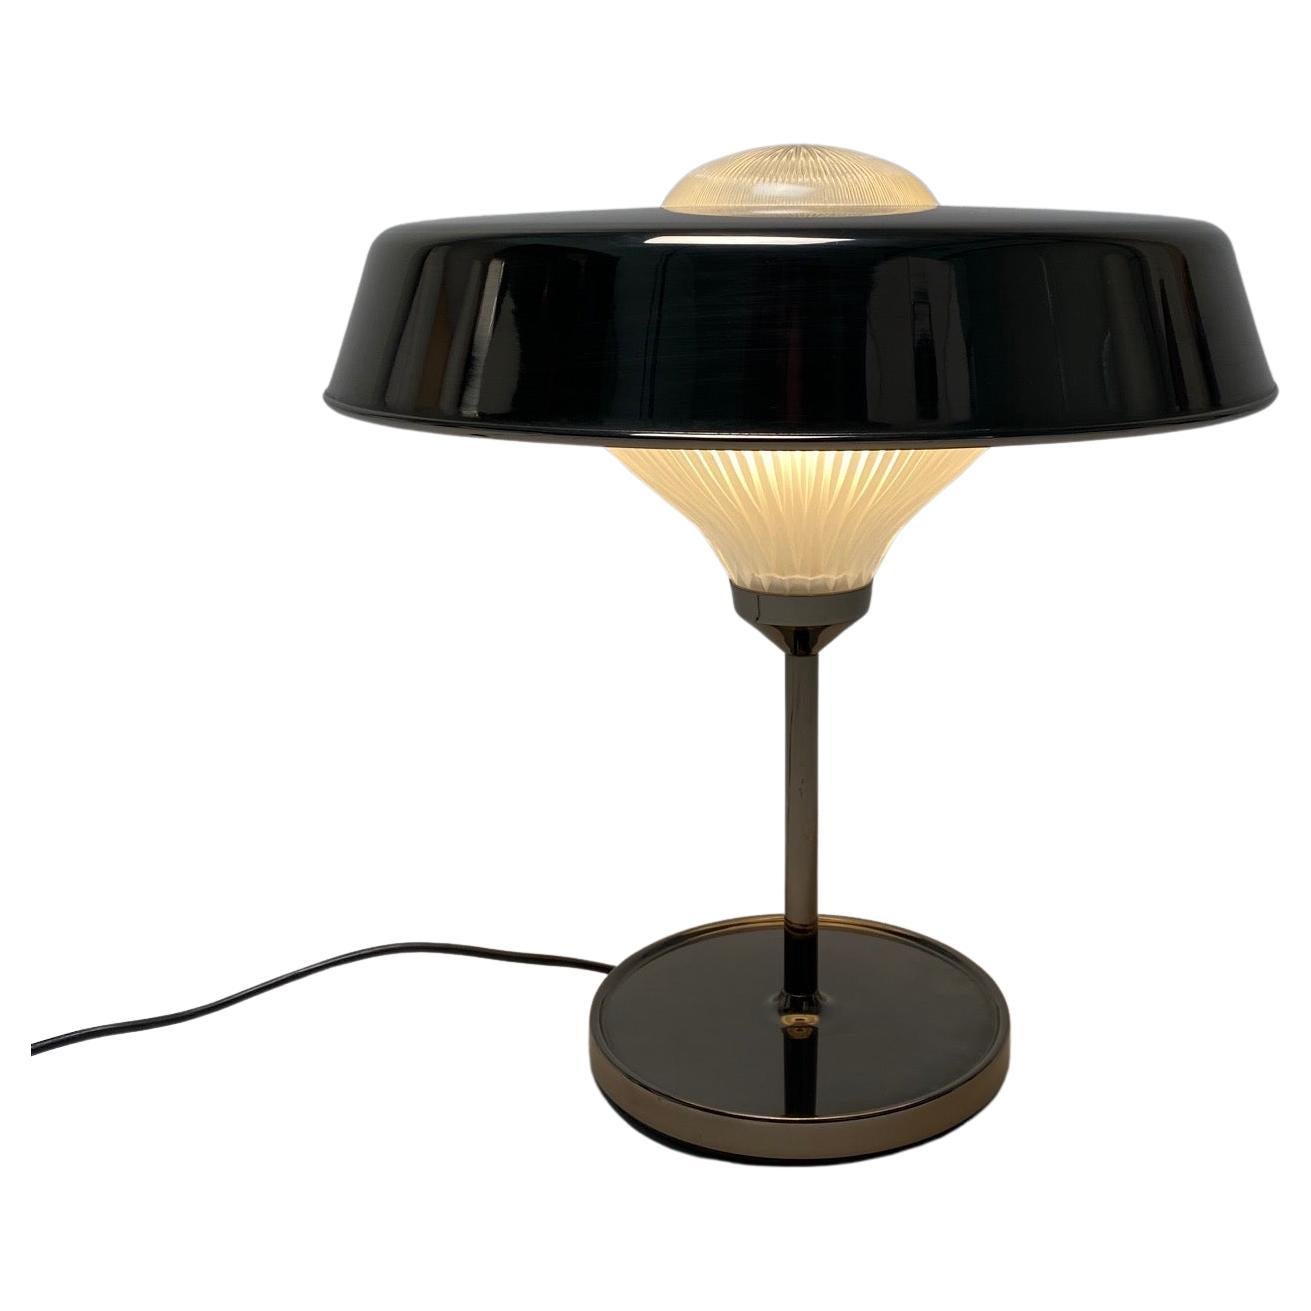 Studio BBPR "Ro" Table Lamp, Artemide, Italy, 1960s For Sale at 1stDibs